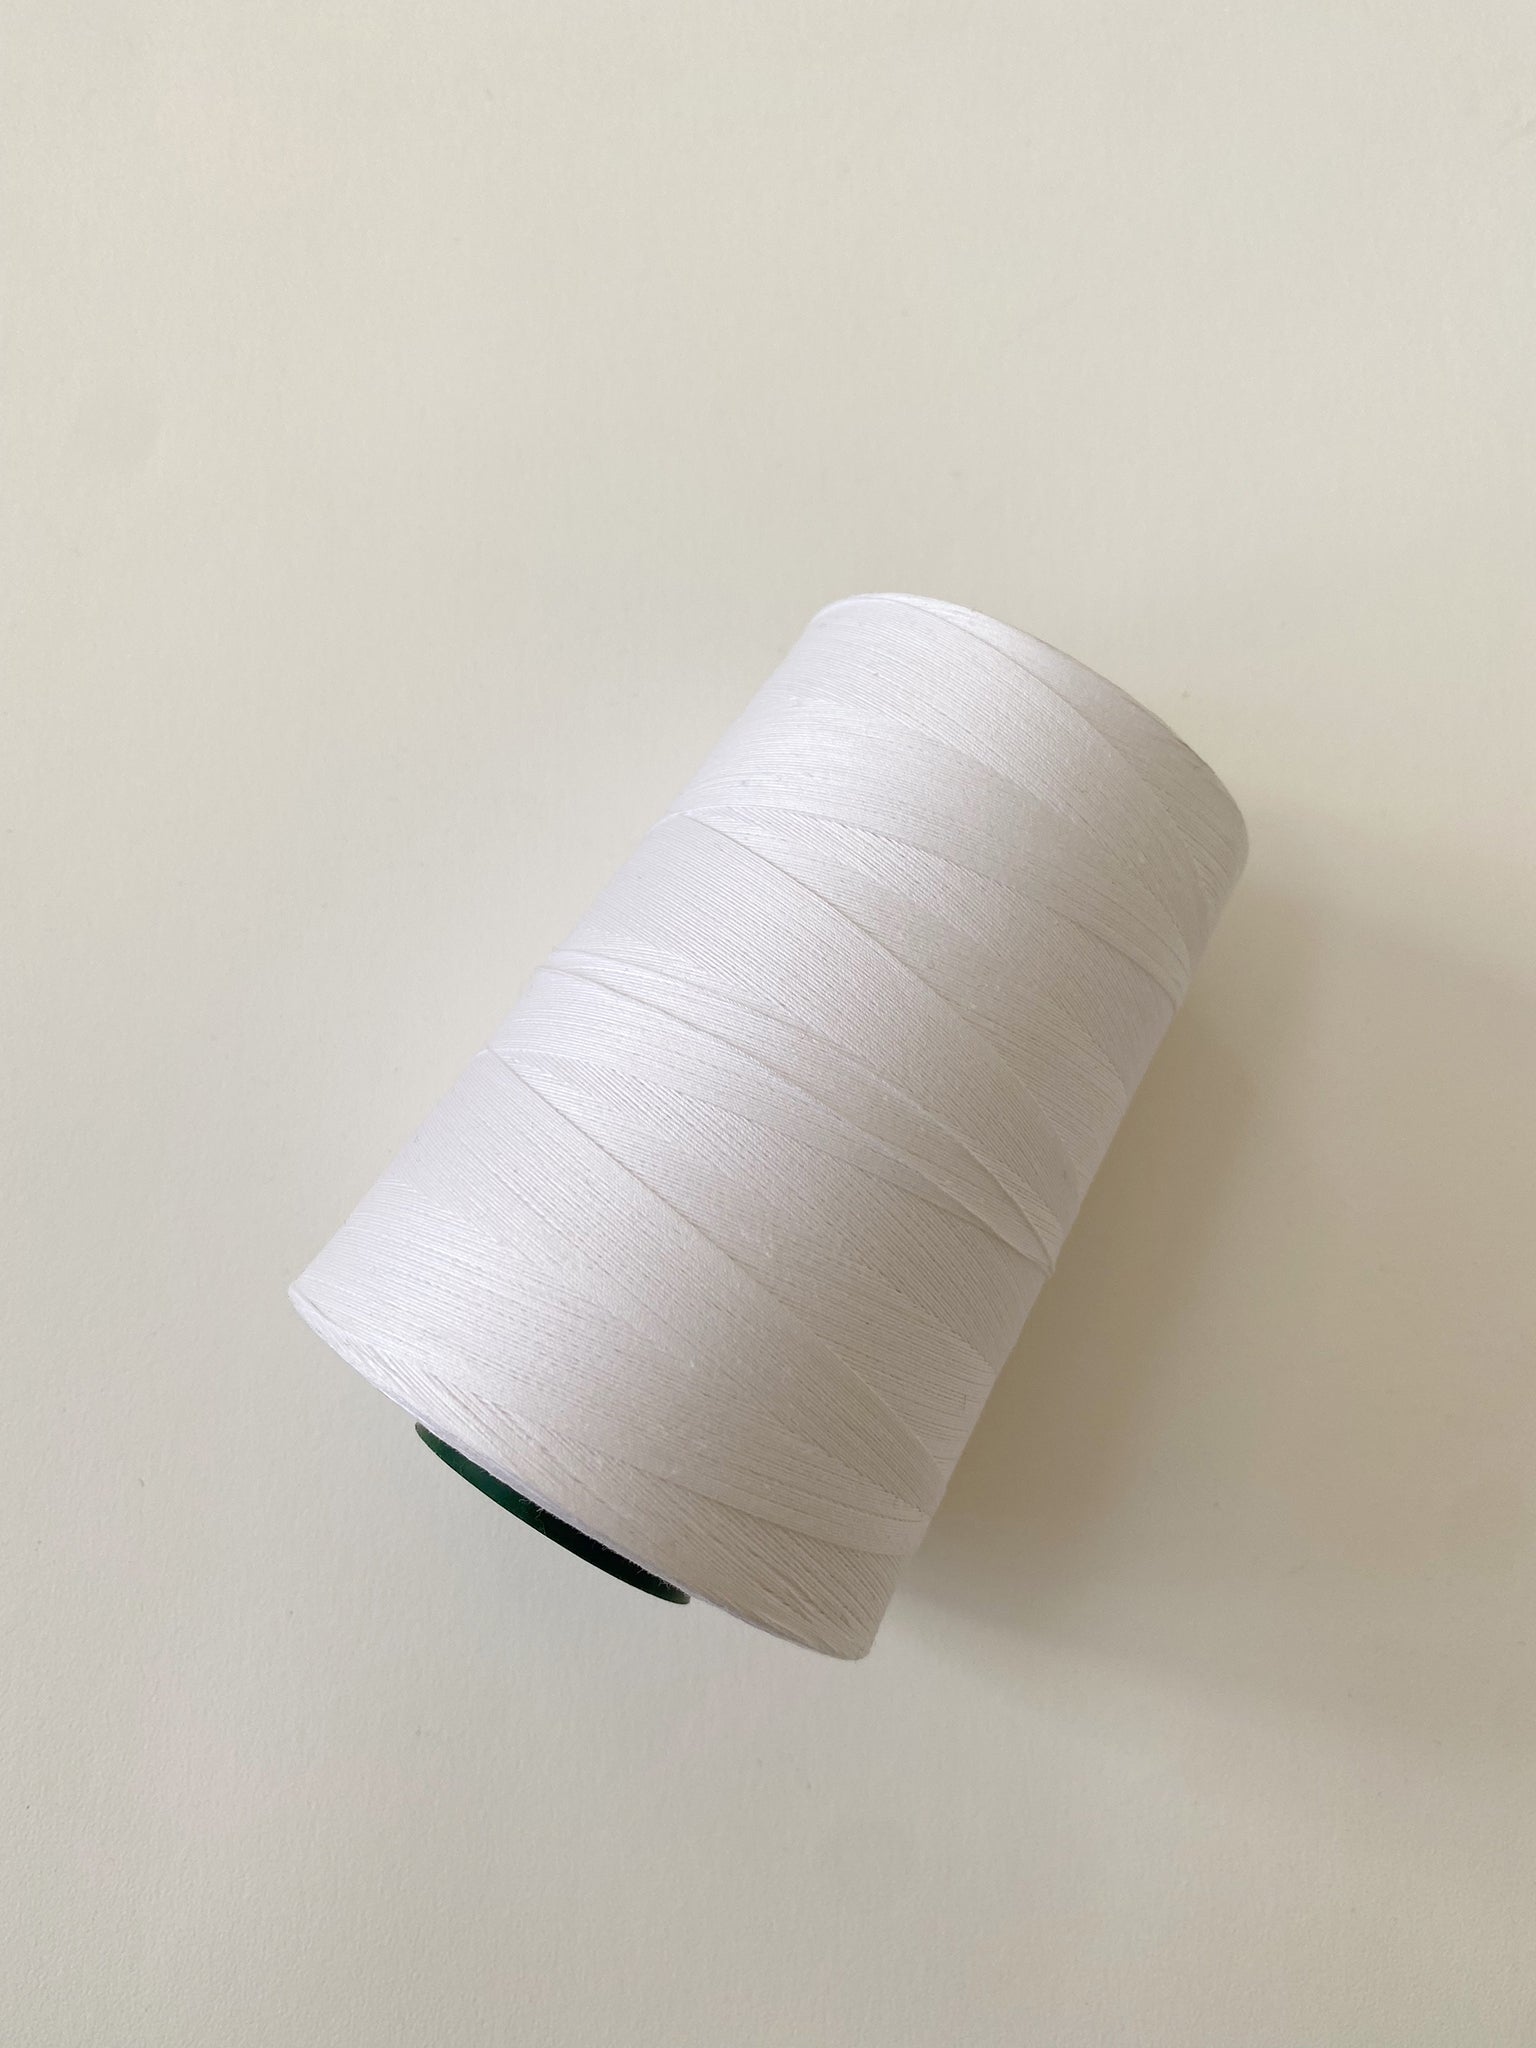 Biodegradable Organic Cotton Sewing Thread White – Circular Factory